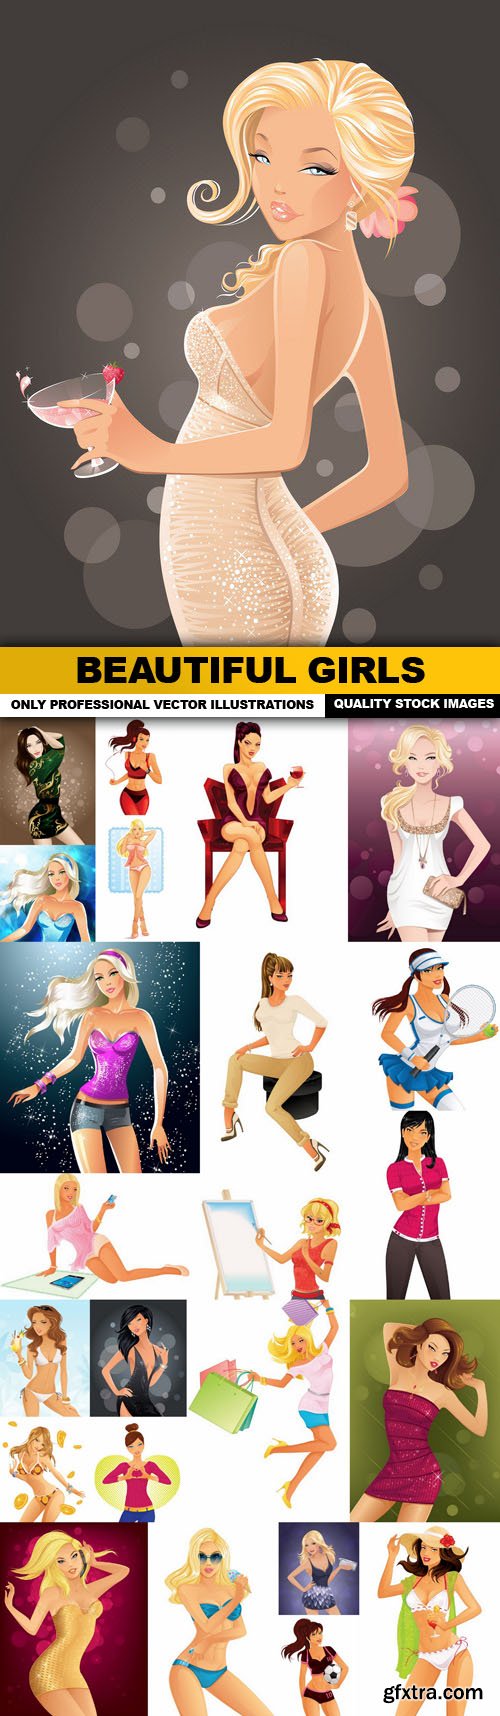 Beautiful Girls - 25 Vector